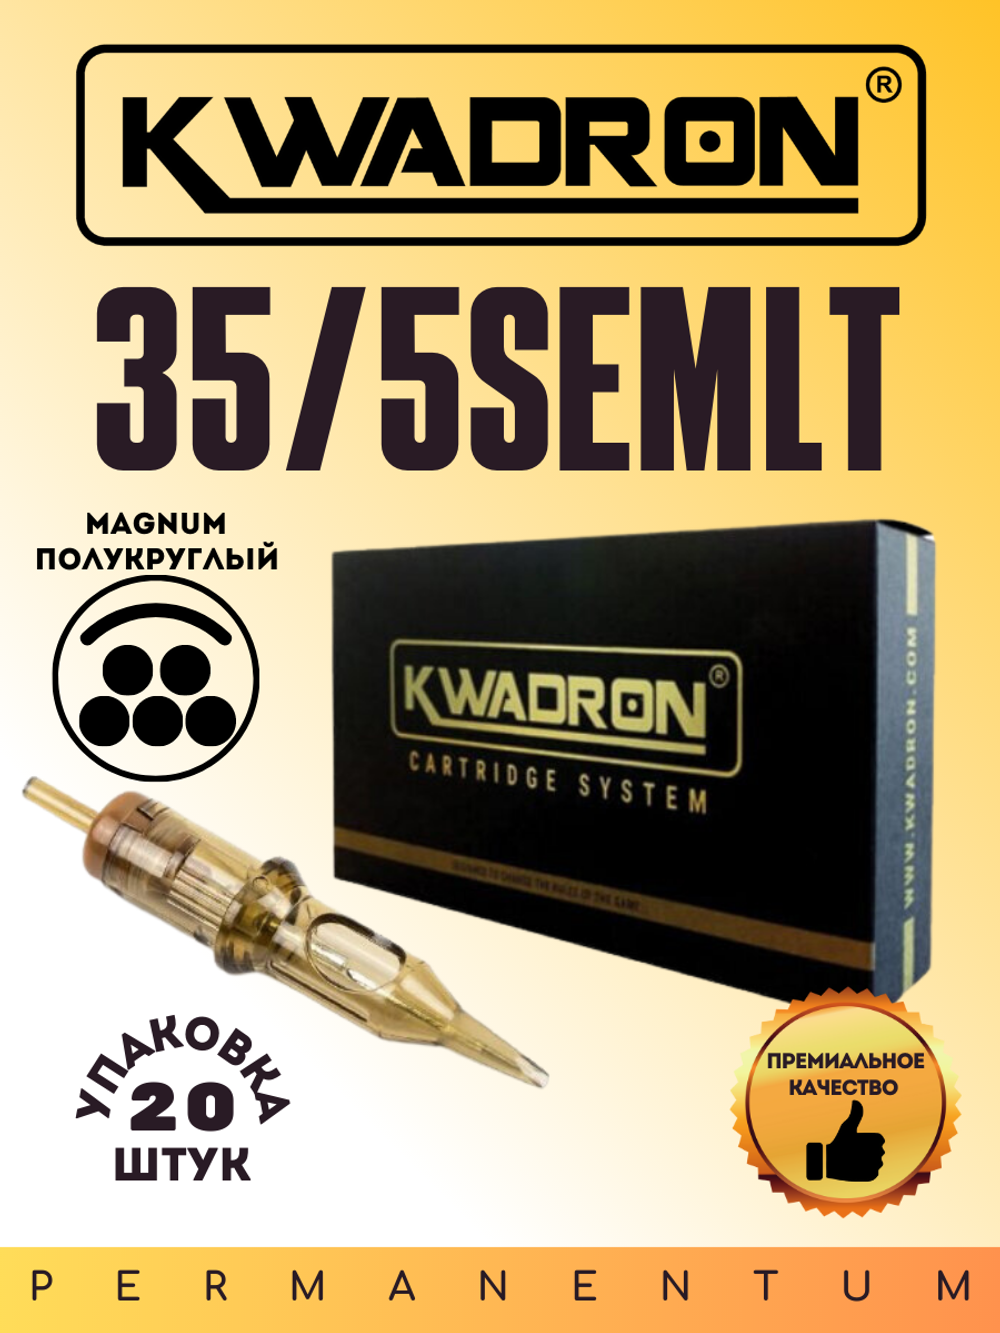 Картридж для татуажа "KWADRON Soft Edge Magnum 35/5SEMLT" упаковка 20 шт.